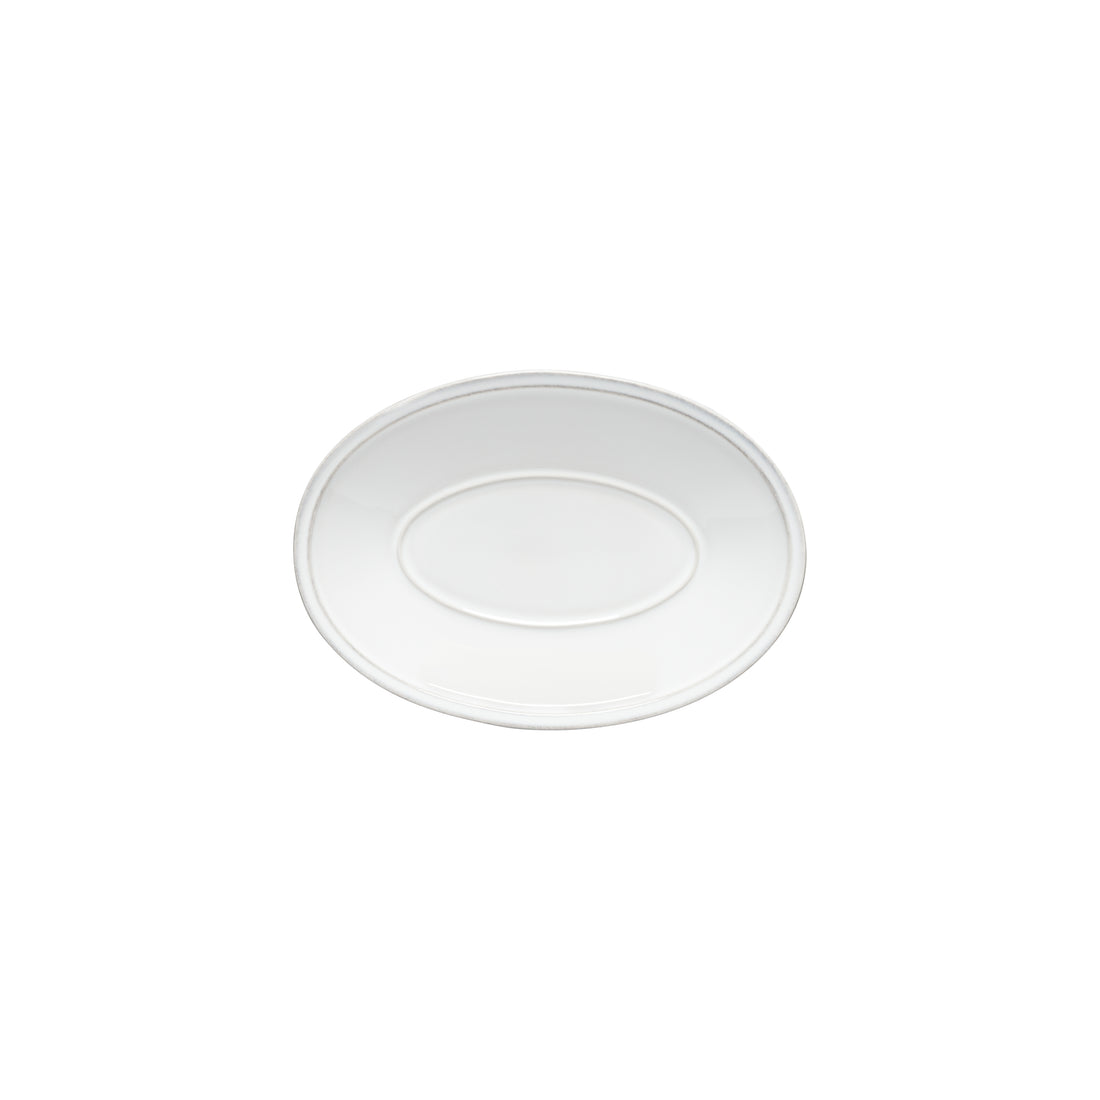 Costa Nova Friso White Small Oval Platter